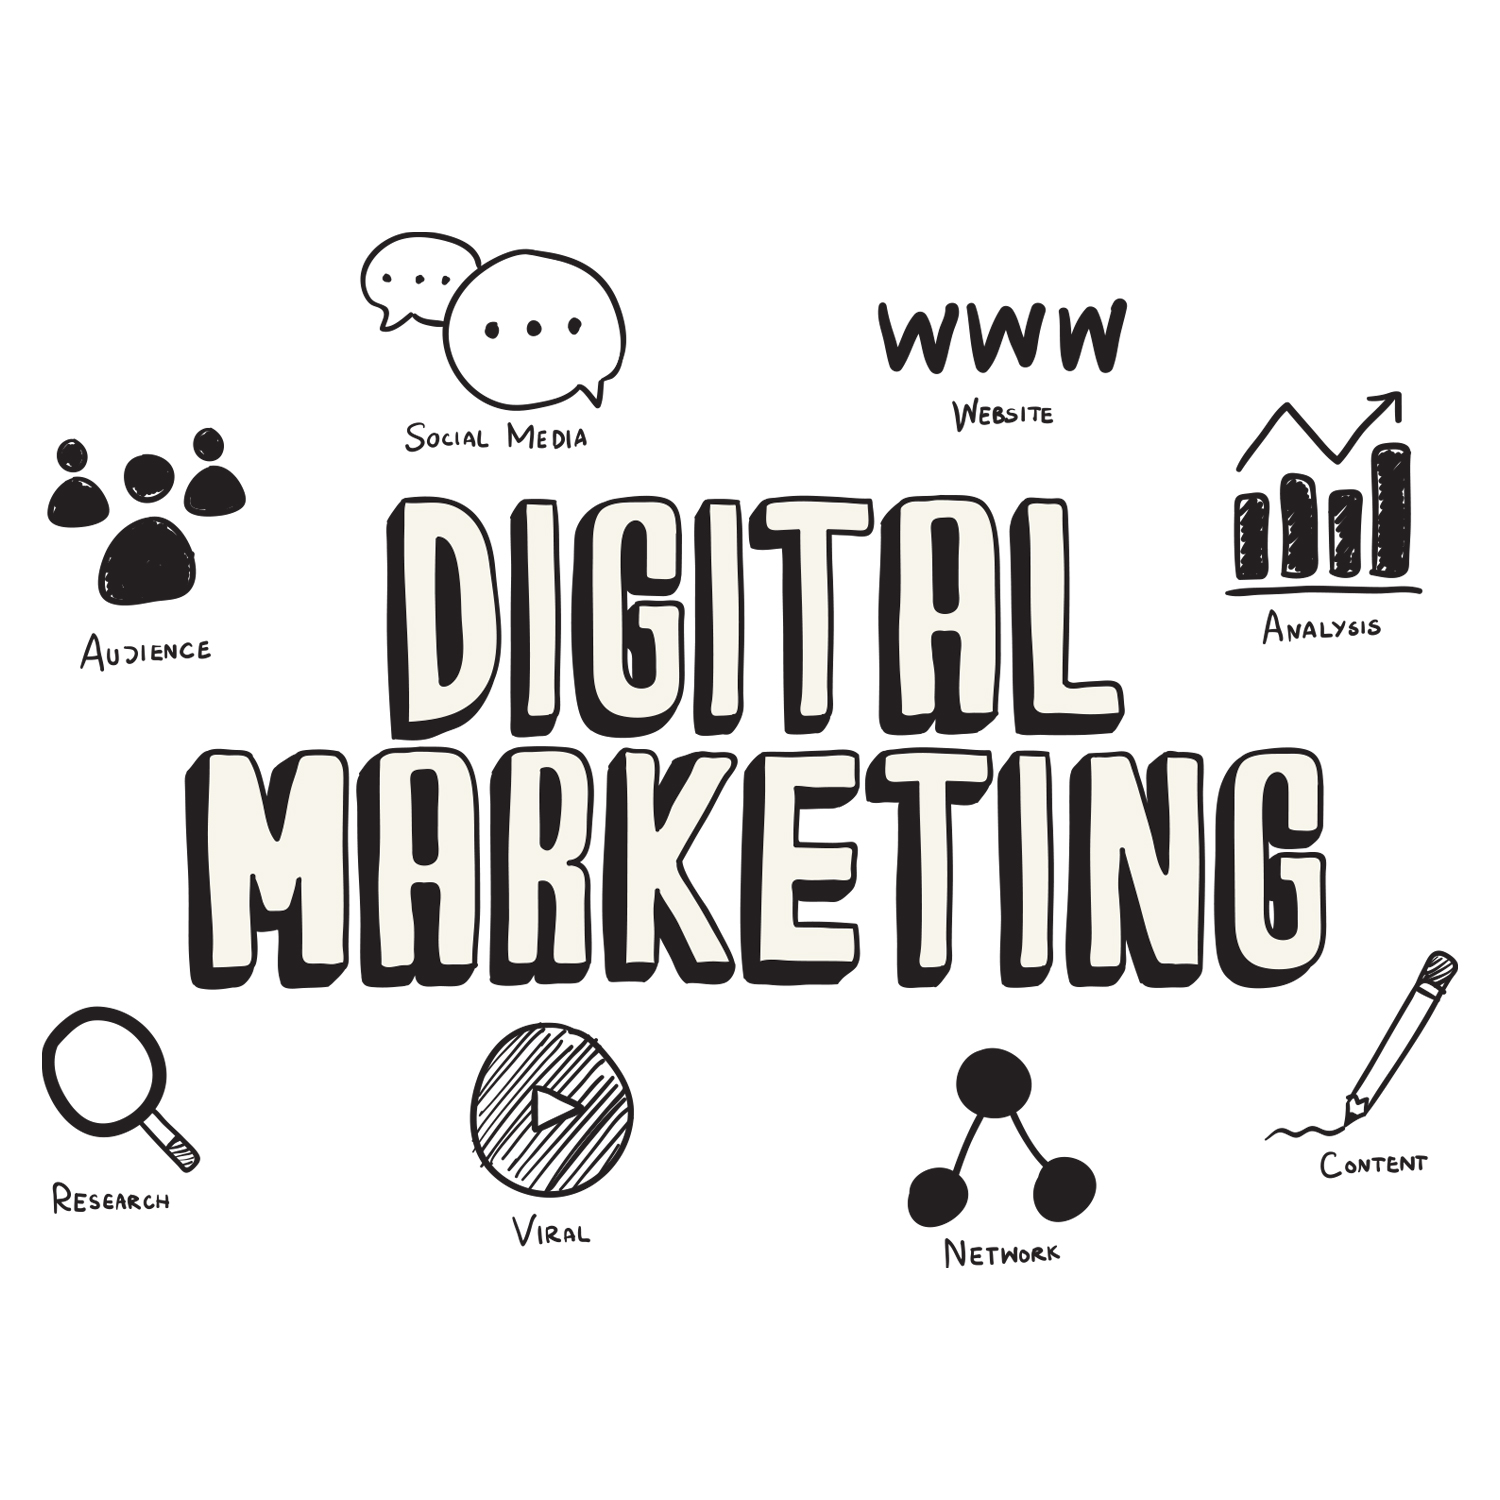 Digital Marketing Help With Brand Awareness